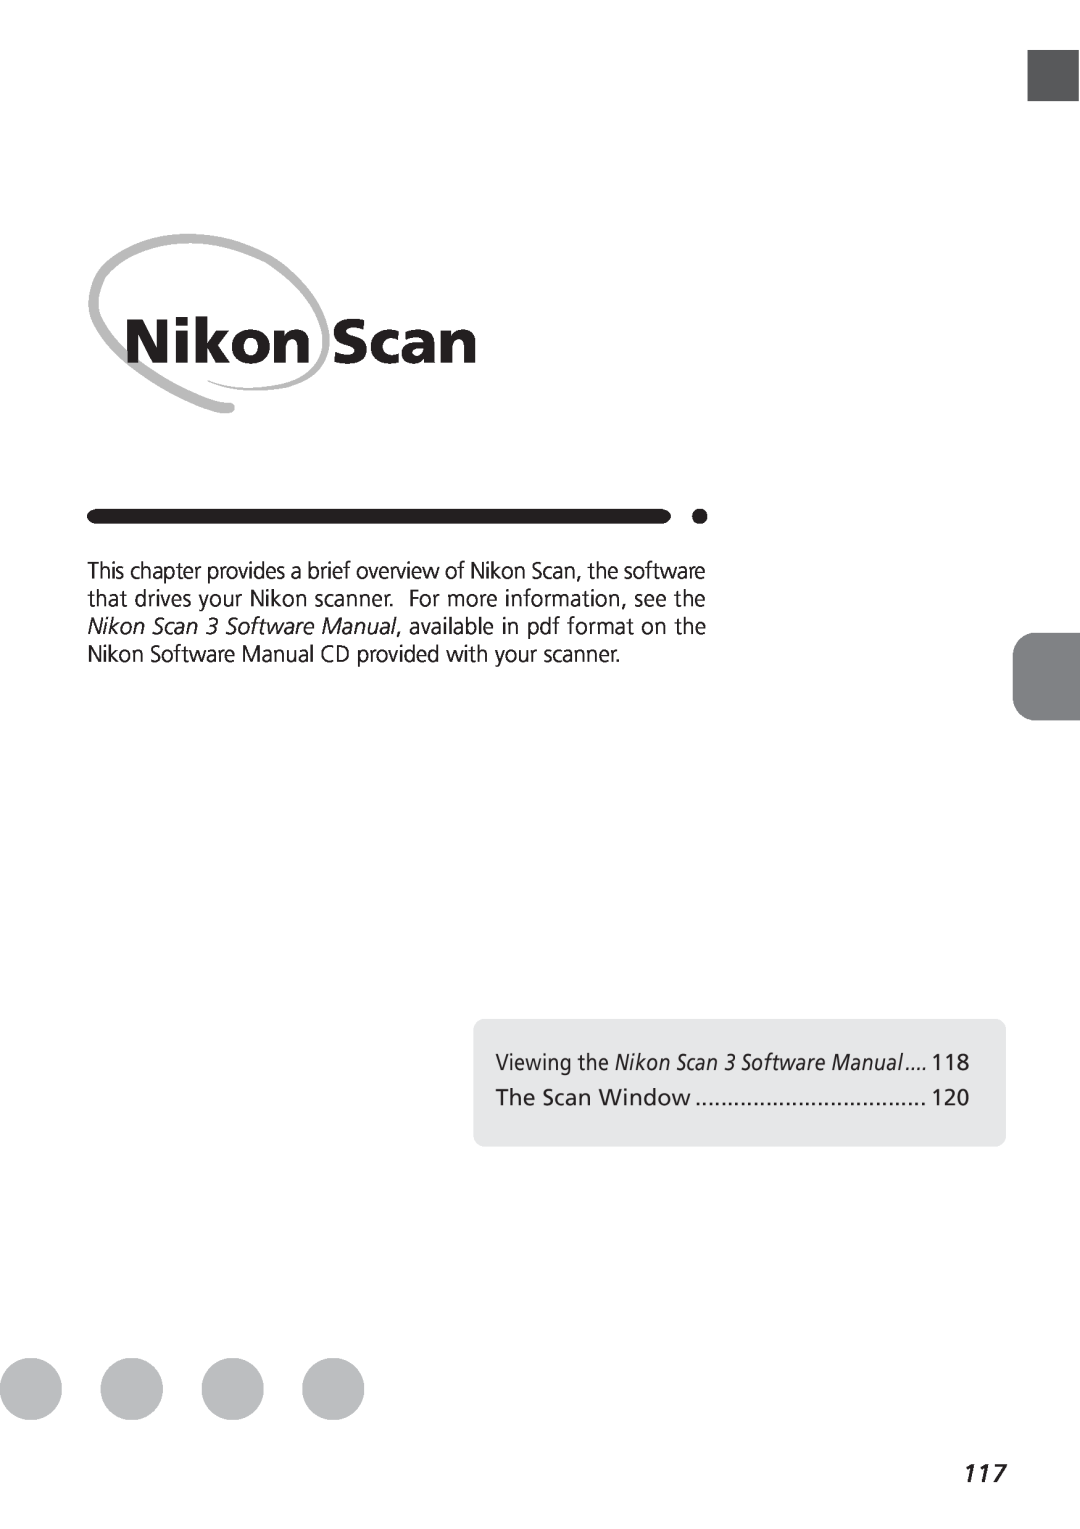 Nikon LS4000 user manual Viewing the Nikon Scan 3 Software Manual 